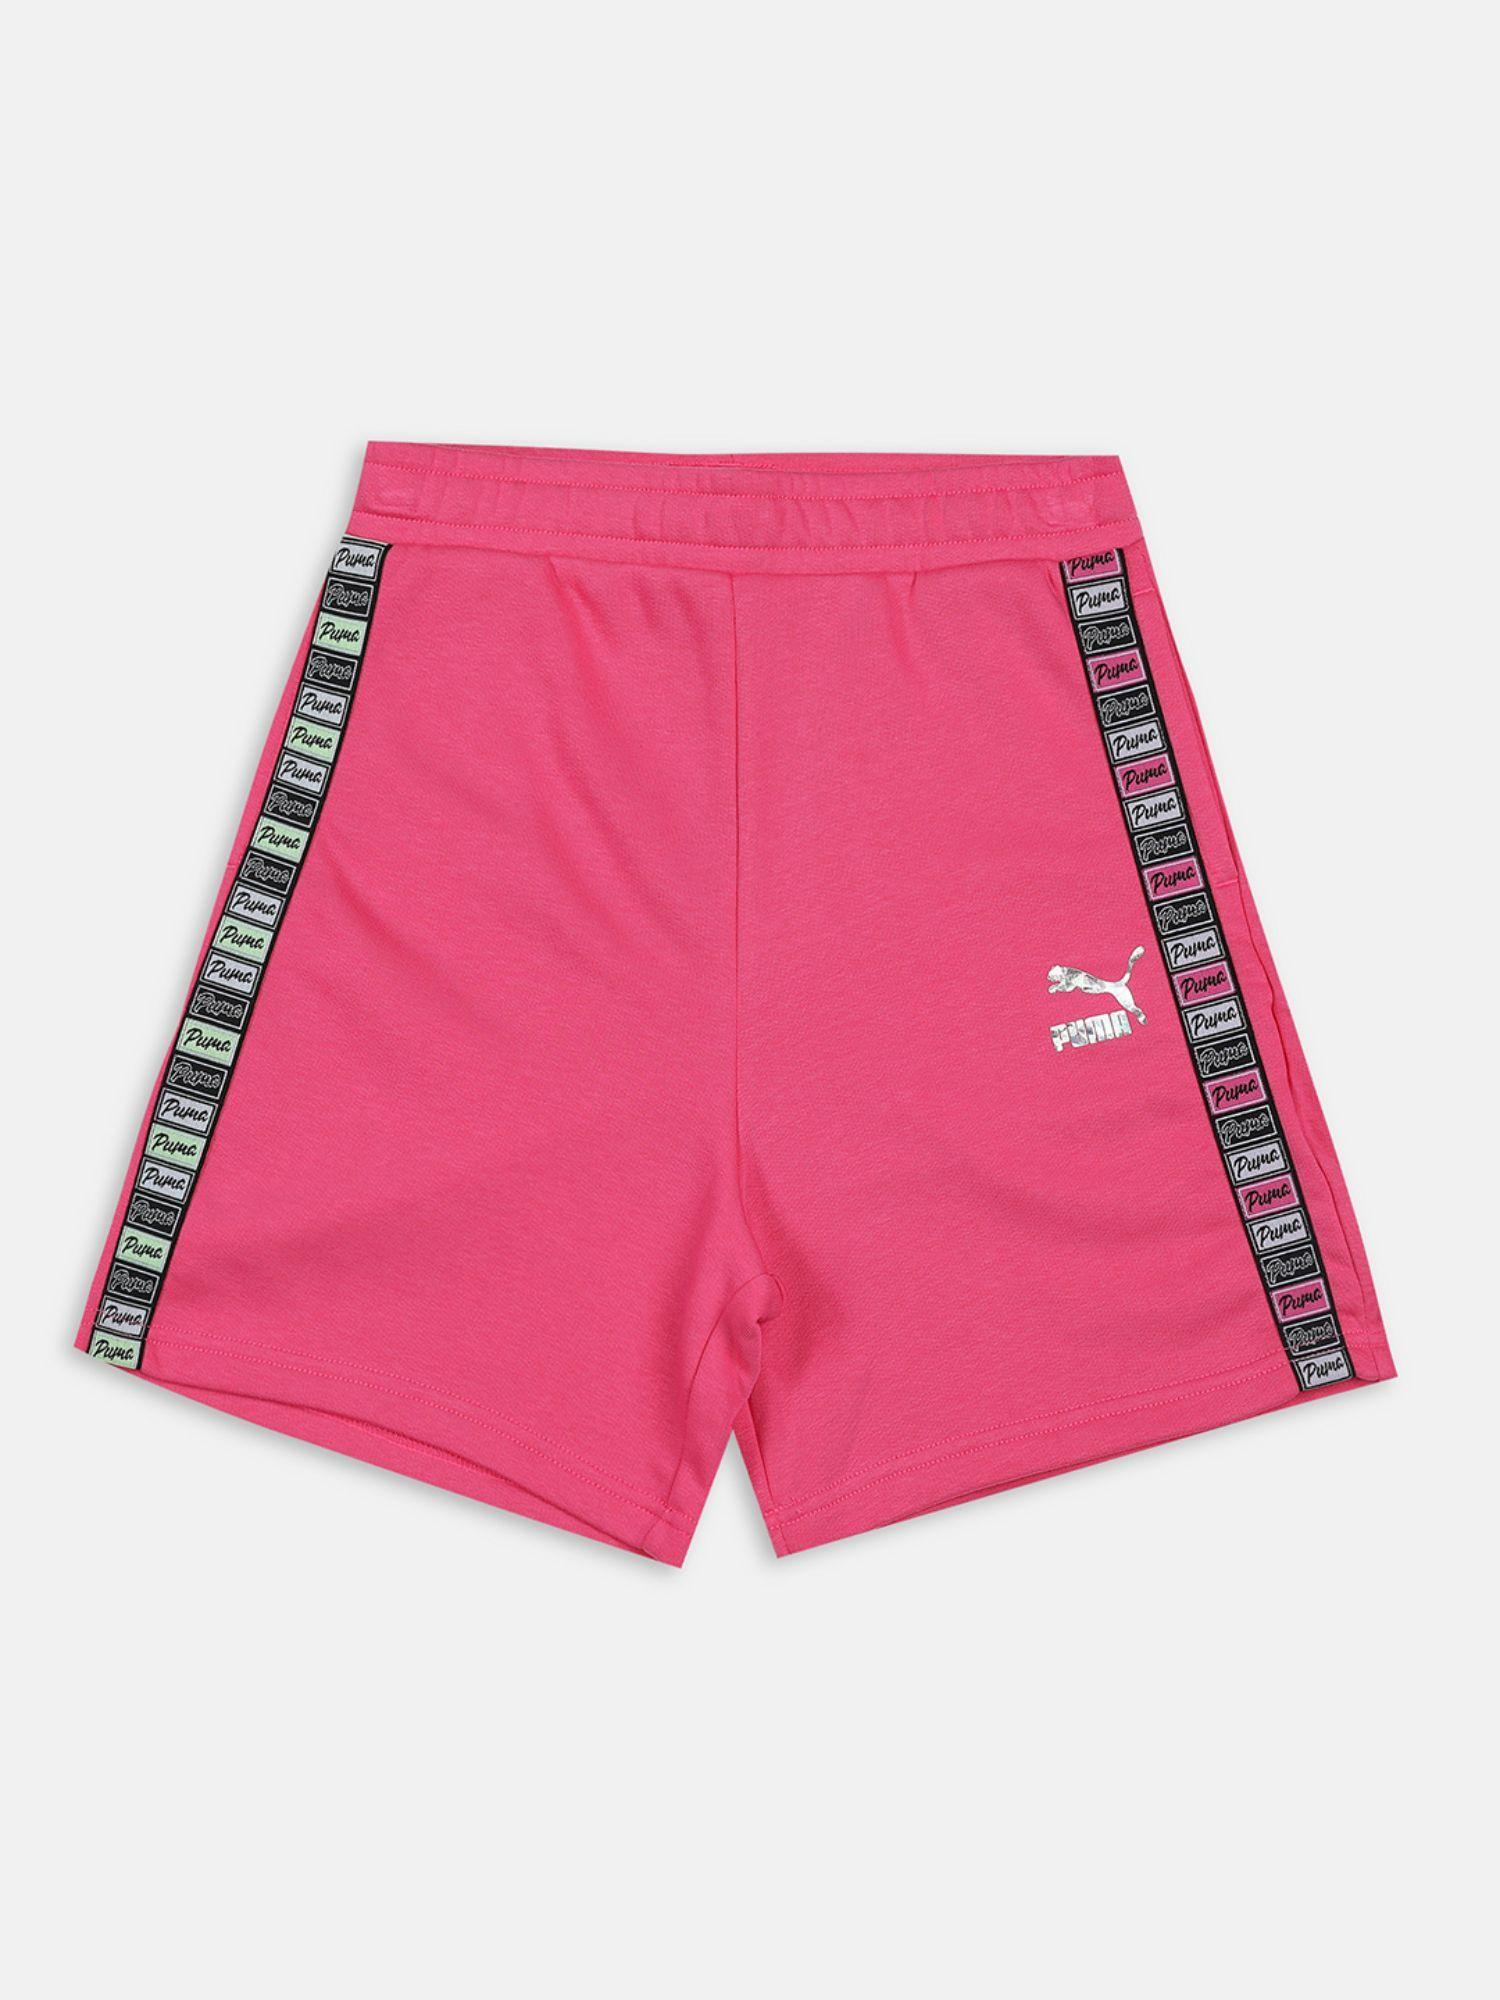 ruleb-high-waisted-girls-pink-shorts